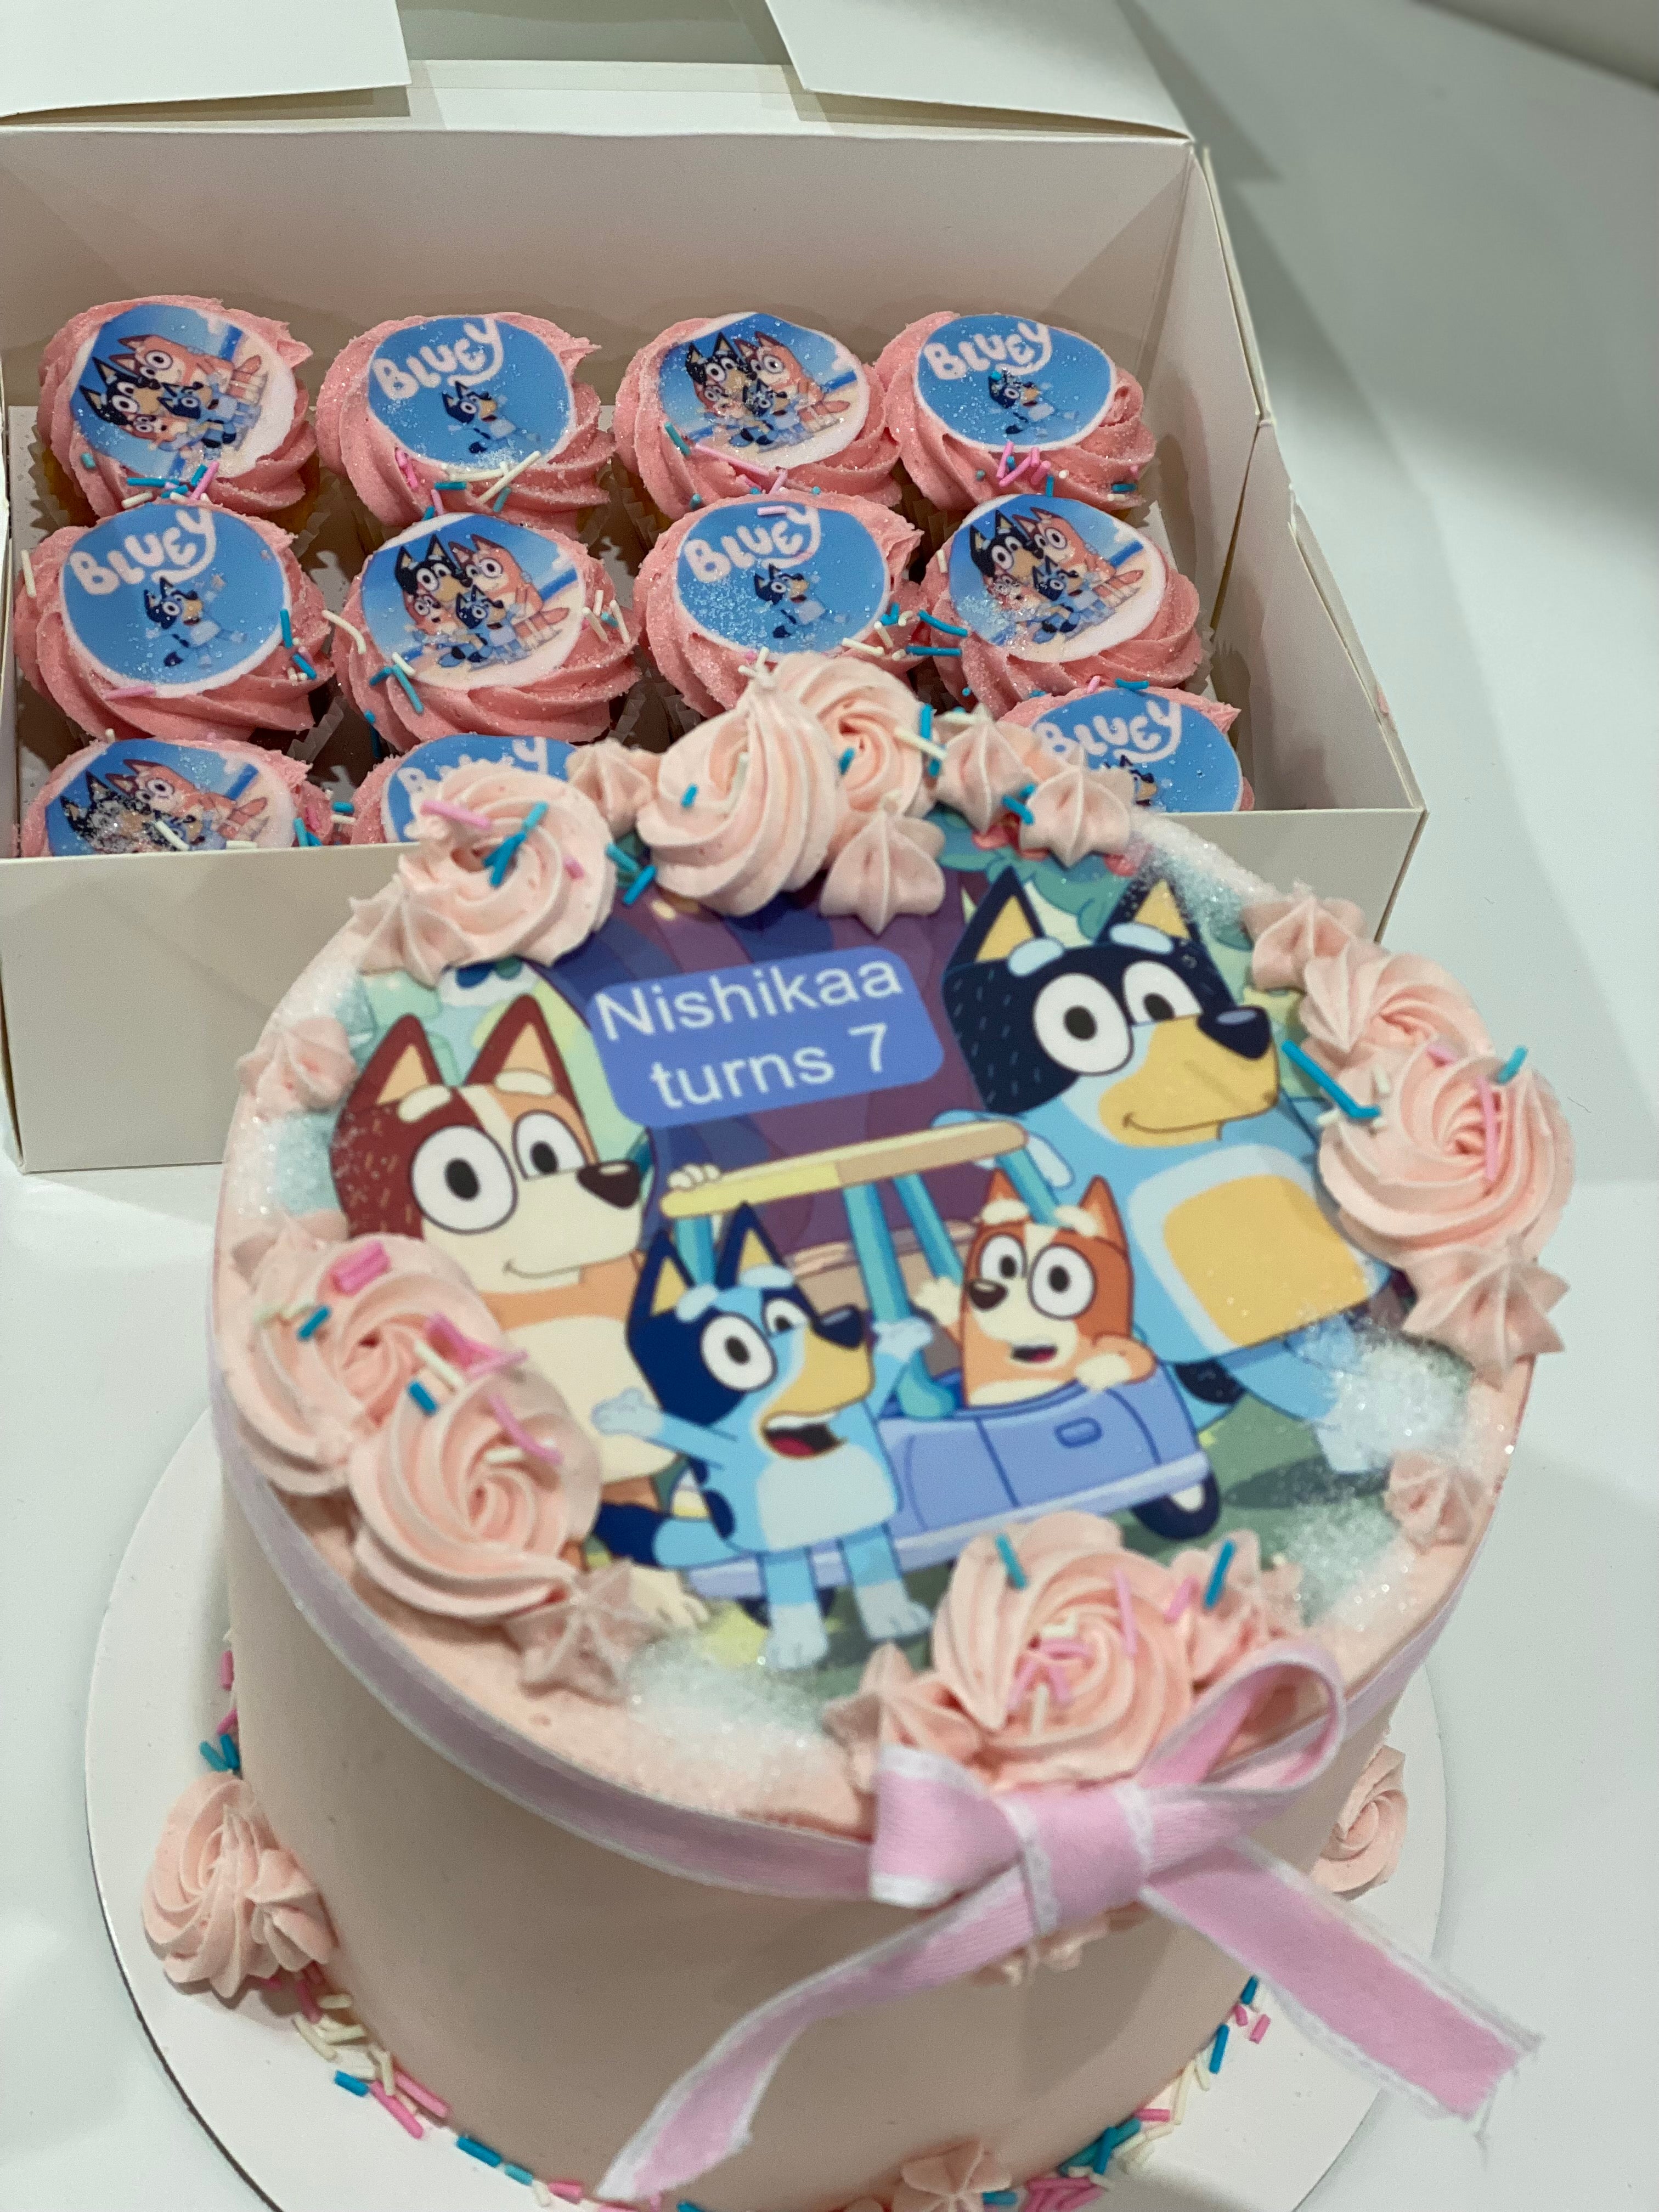 6" Bluey and family cake + 24 mini cupcakes